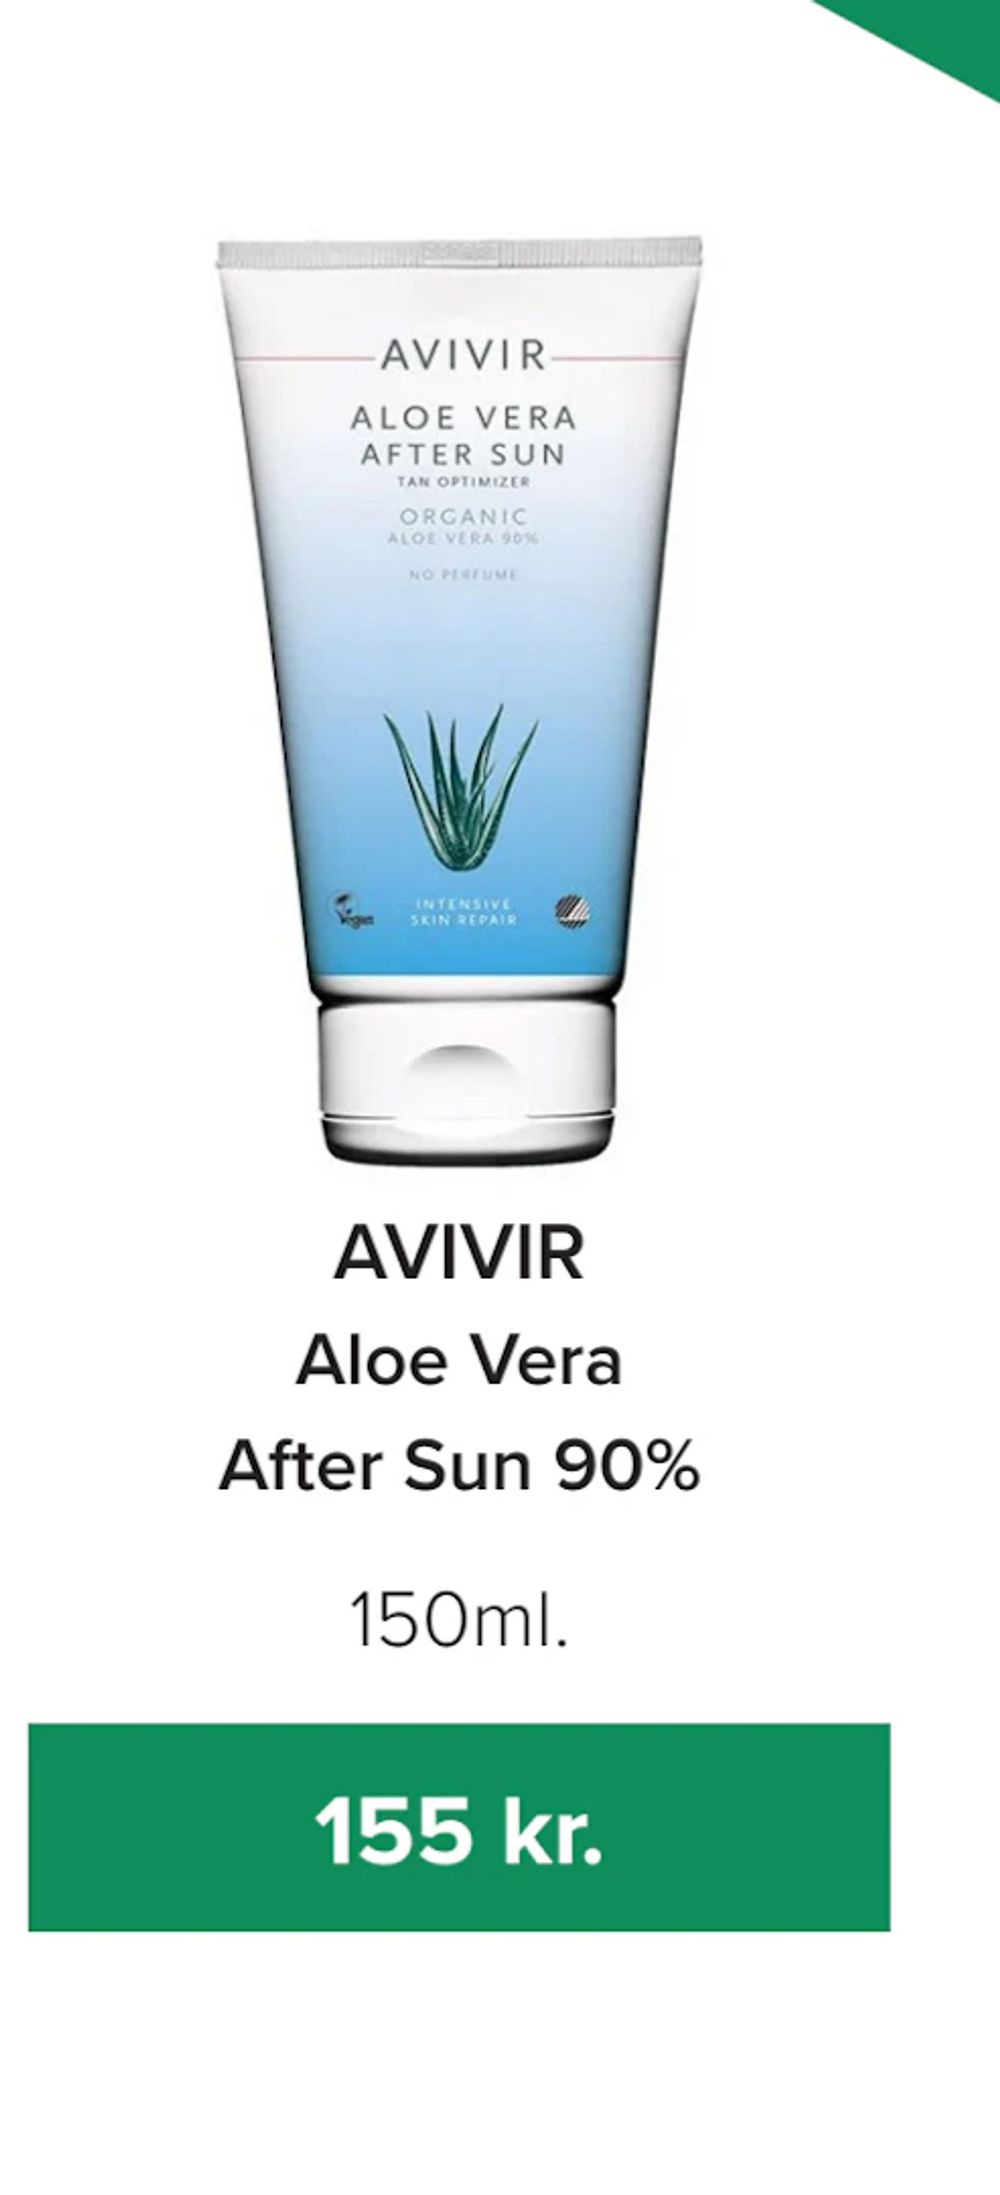 Tilbud på Aloe Vera After Sun 90% fra Helsemin til 155 kr.